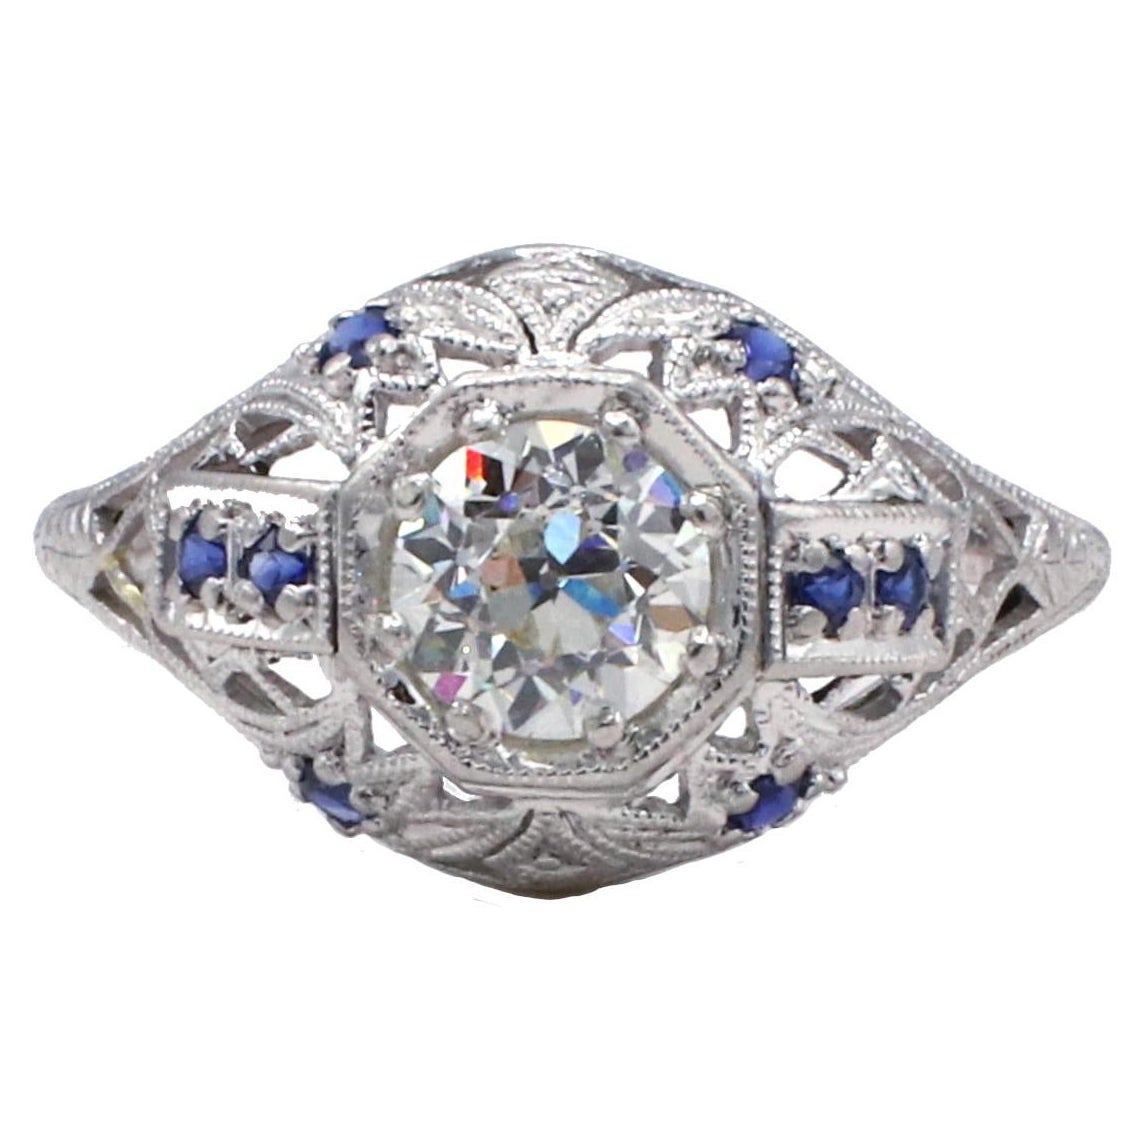 Art Deco Platinum .81 Carat Old European Cut Diamond & Sapphire Engagement Ring 